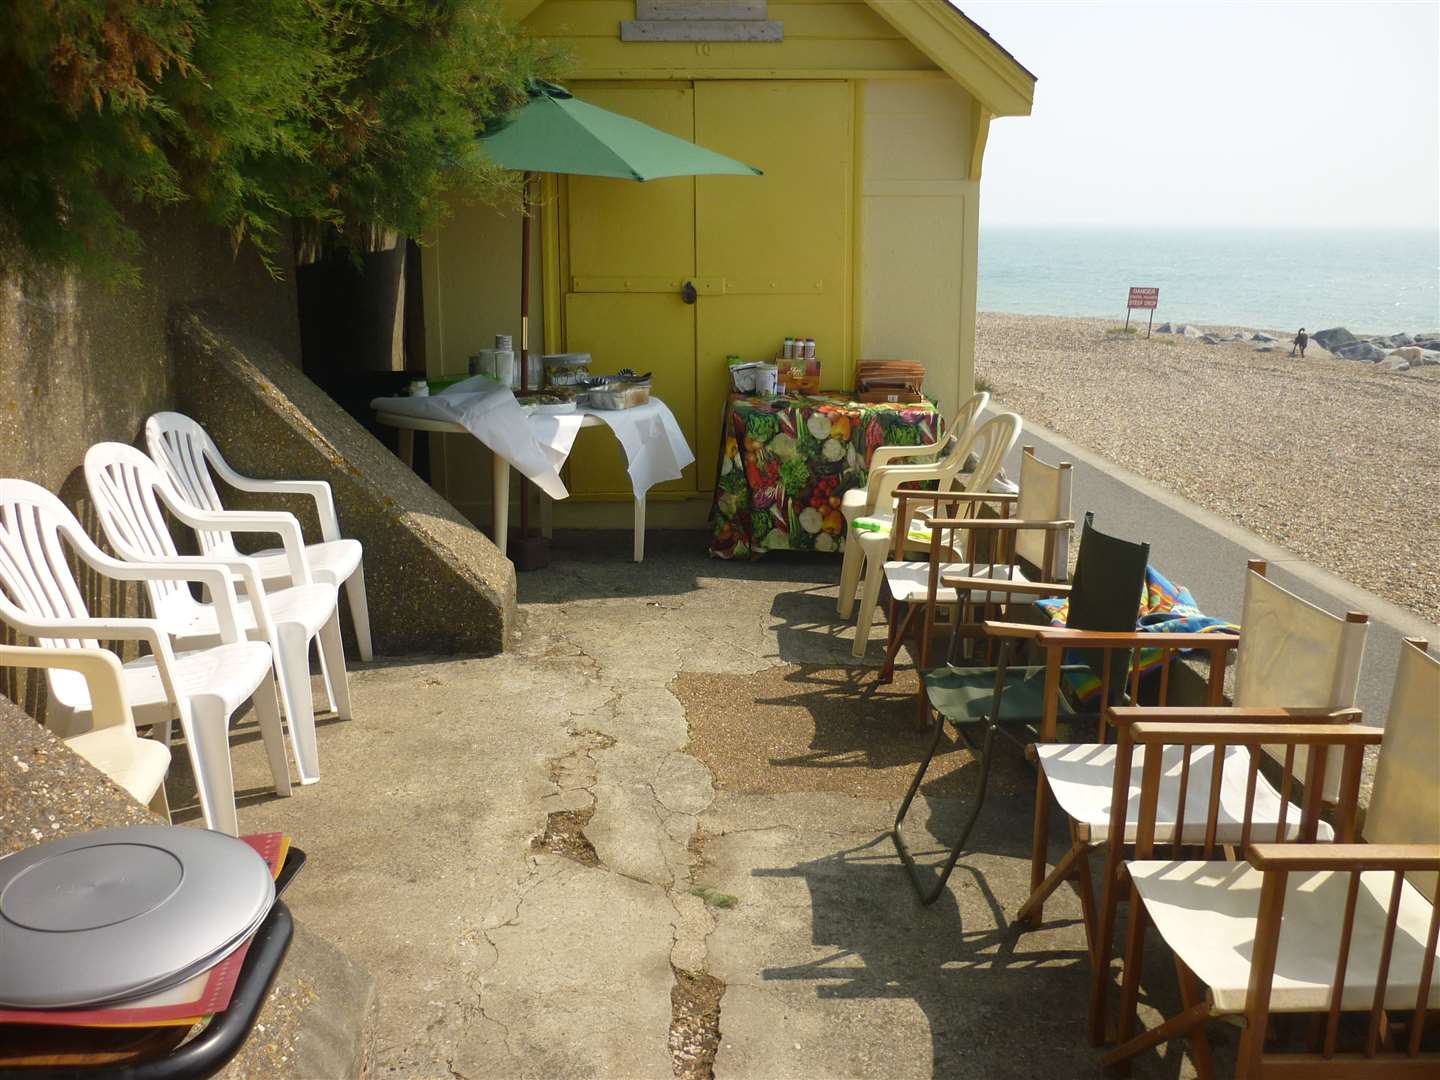 Nicola Tolson's beach hut, which she had for 20 years